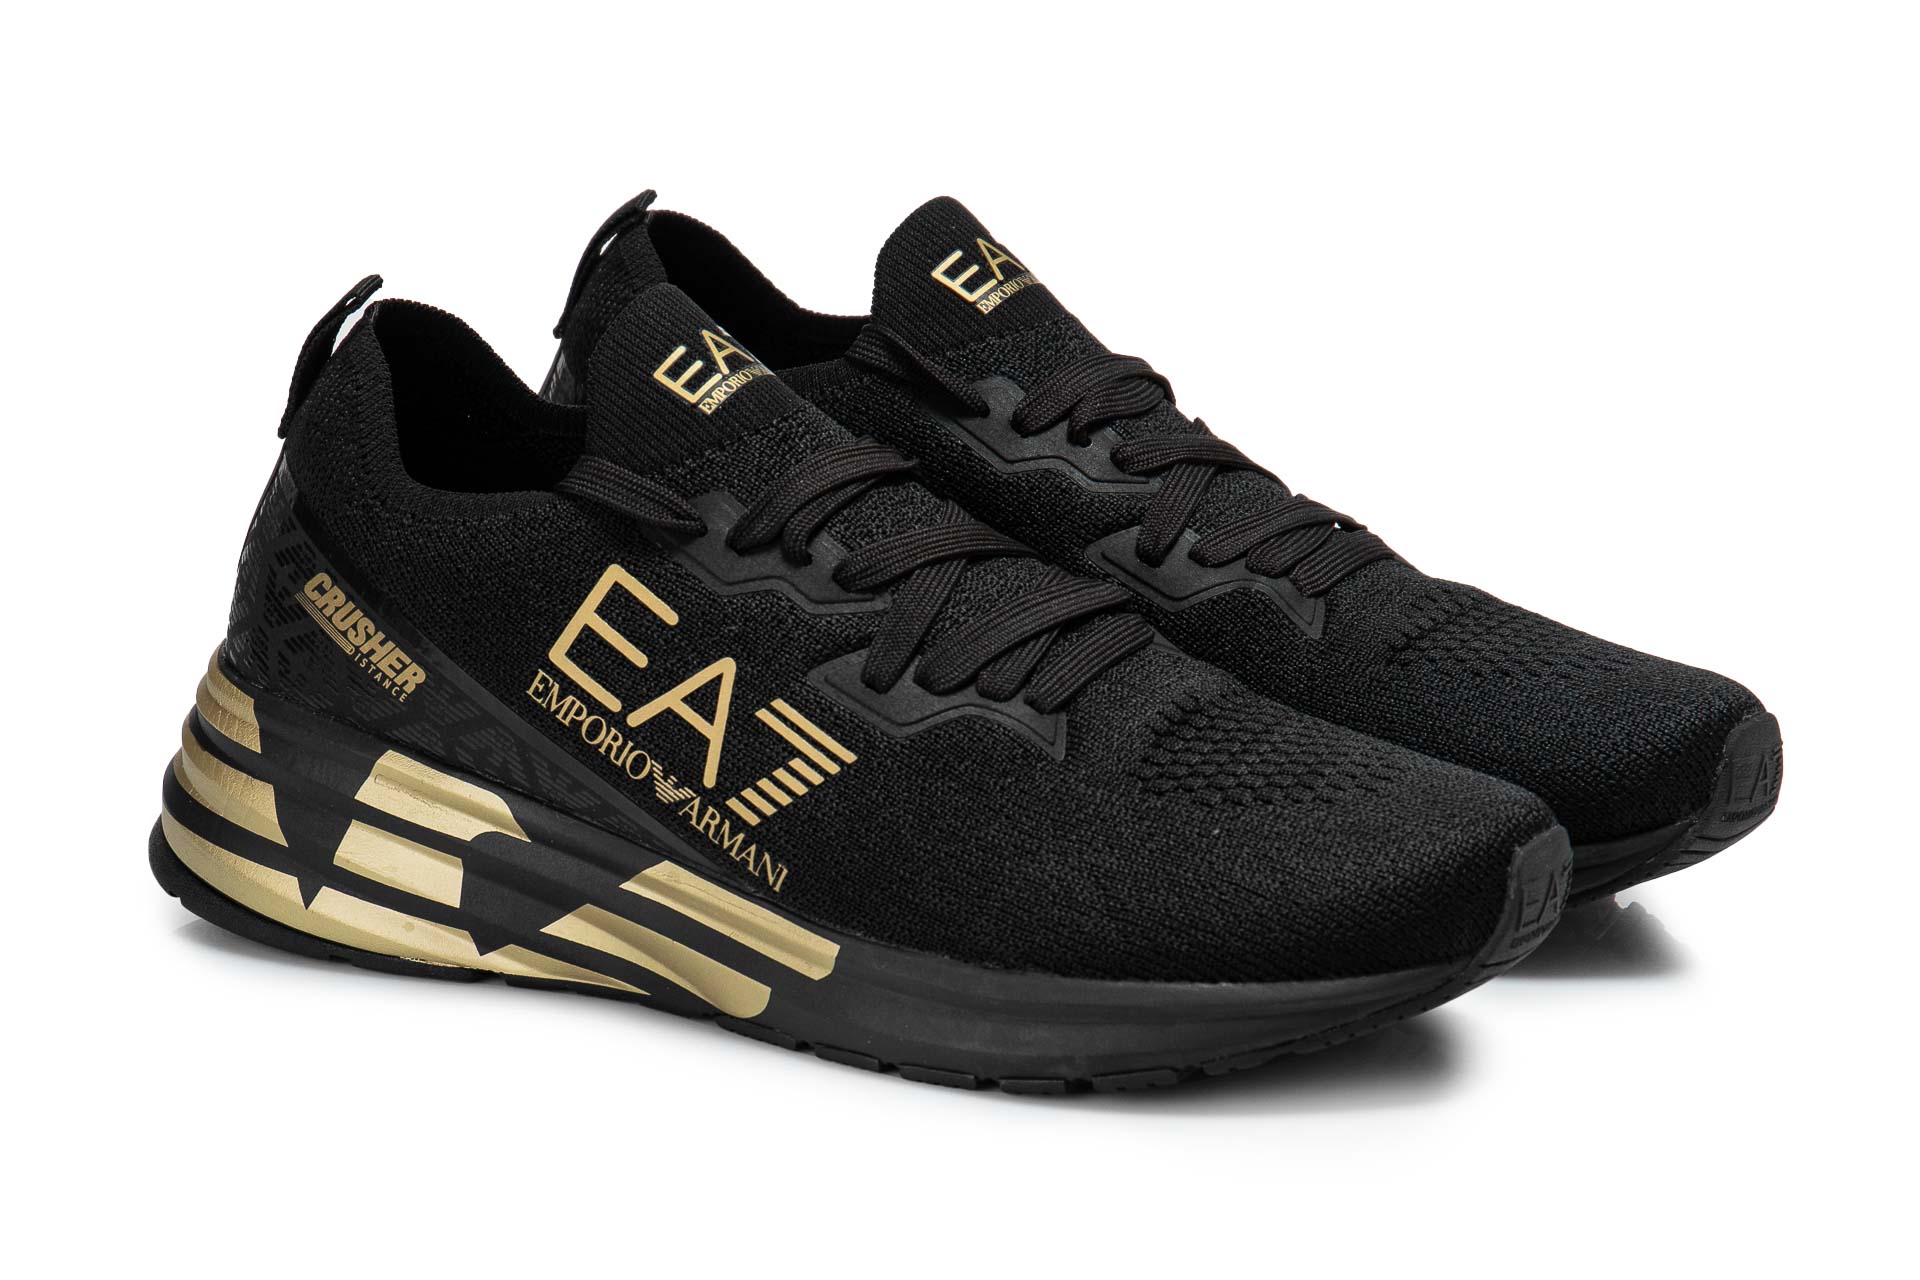 Sneakersy unisex EA7 Emporio Armani X8X095-XK240-M701